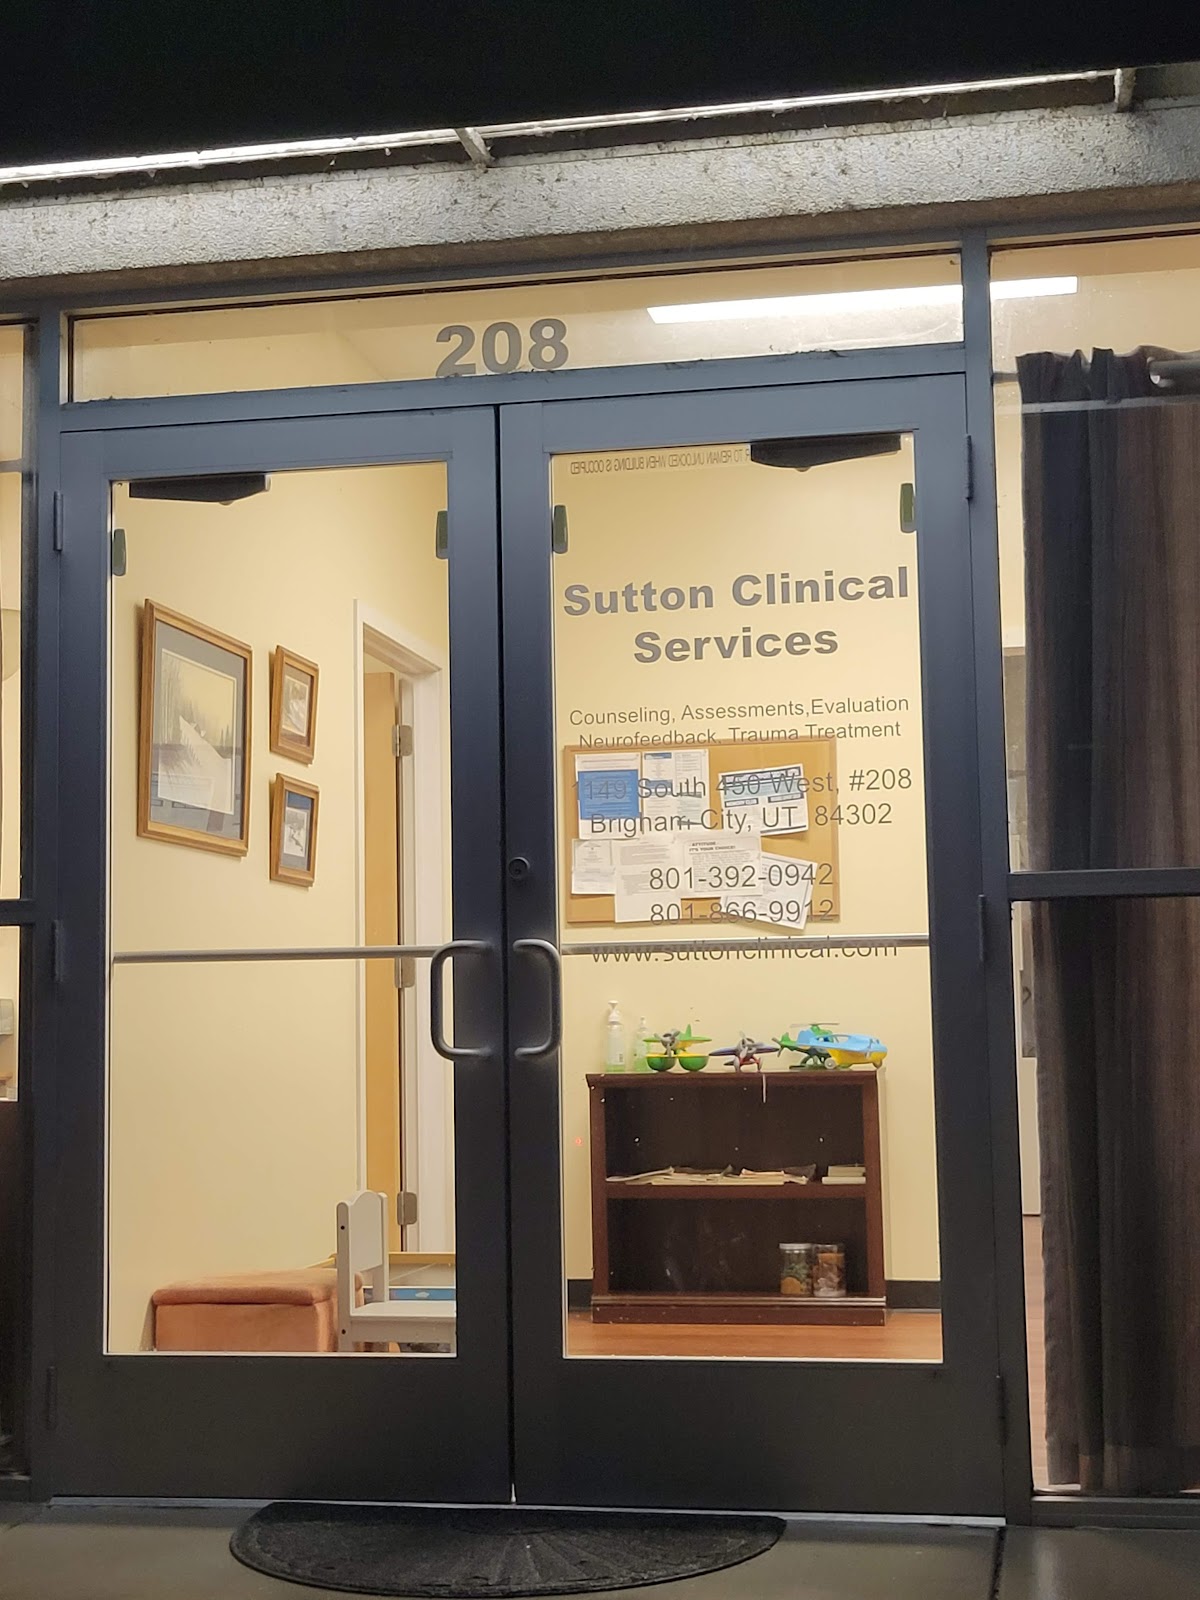 Sutton Clinical Services